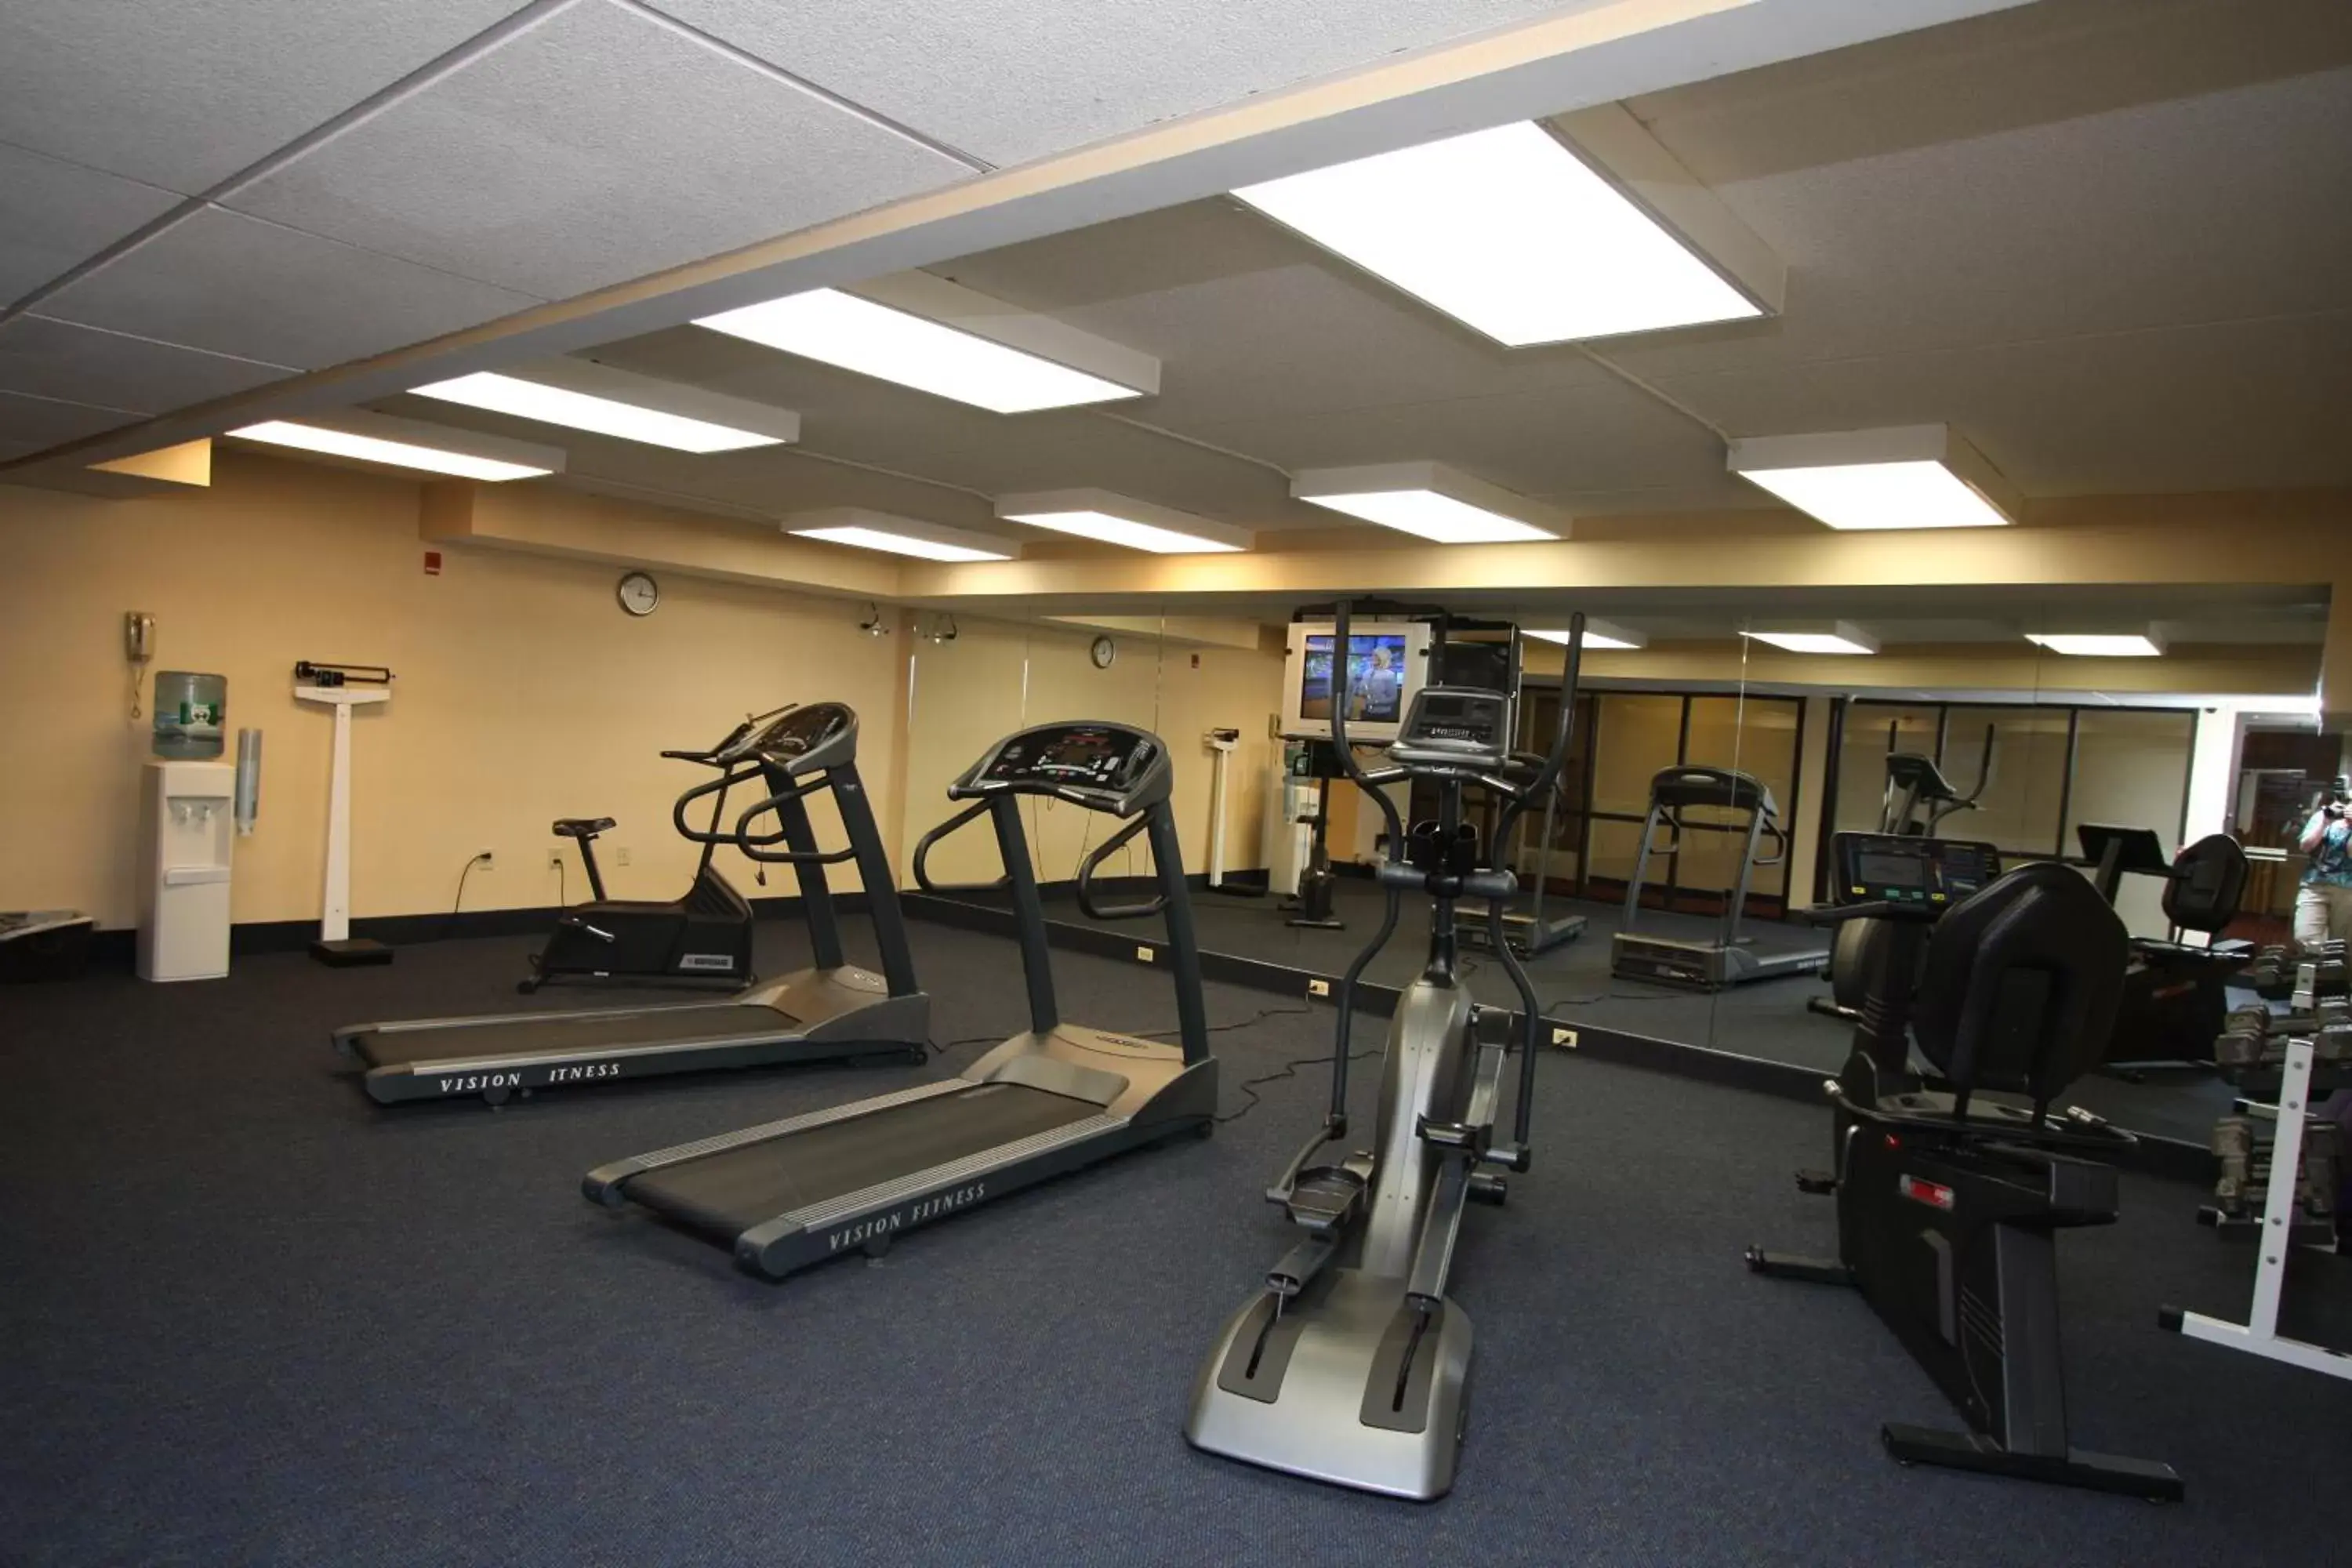 Fitness centre/facilities, Fitness Center/Facilities in Boxboro Regency